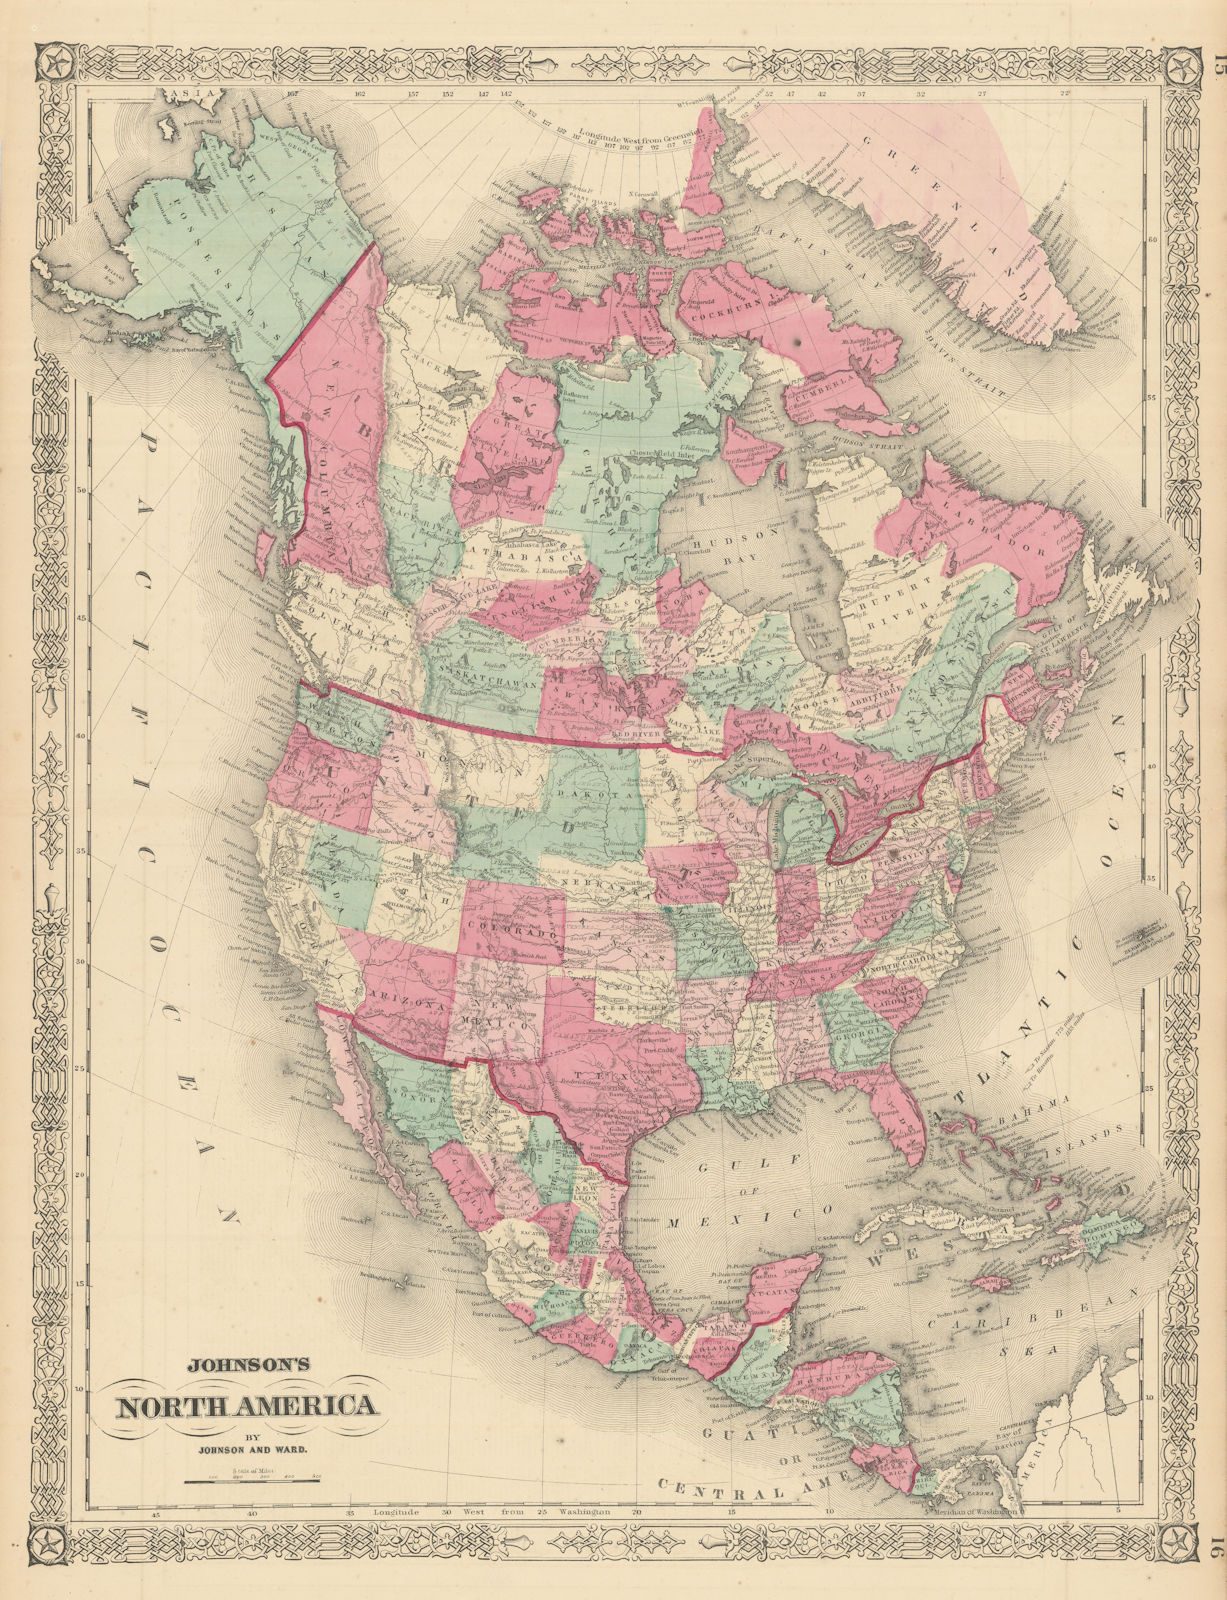 Associate Product Johnson's North America. Russian Alaska Wyoming within Dakota Territory 1866 map